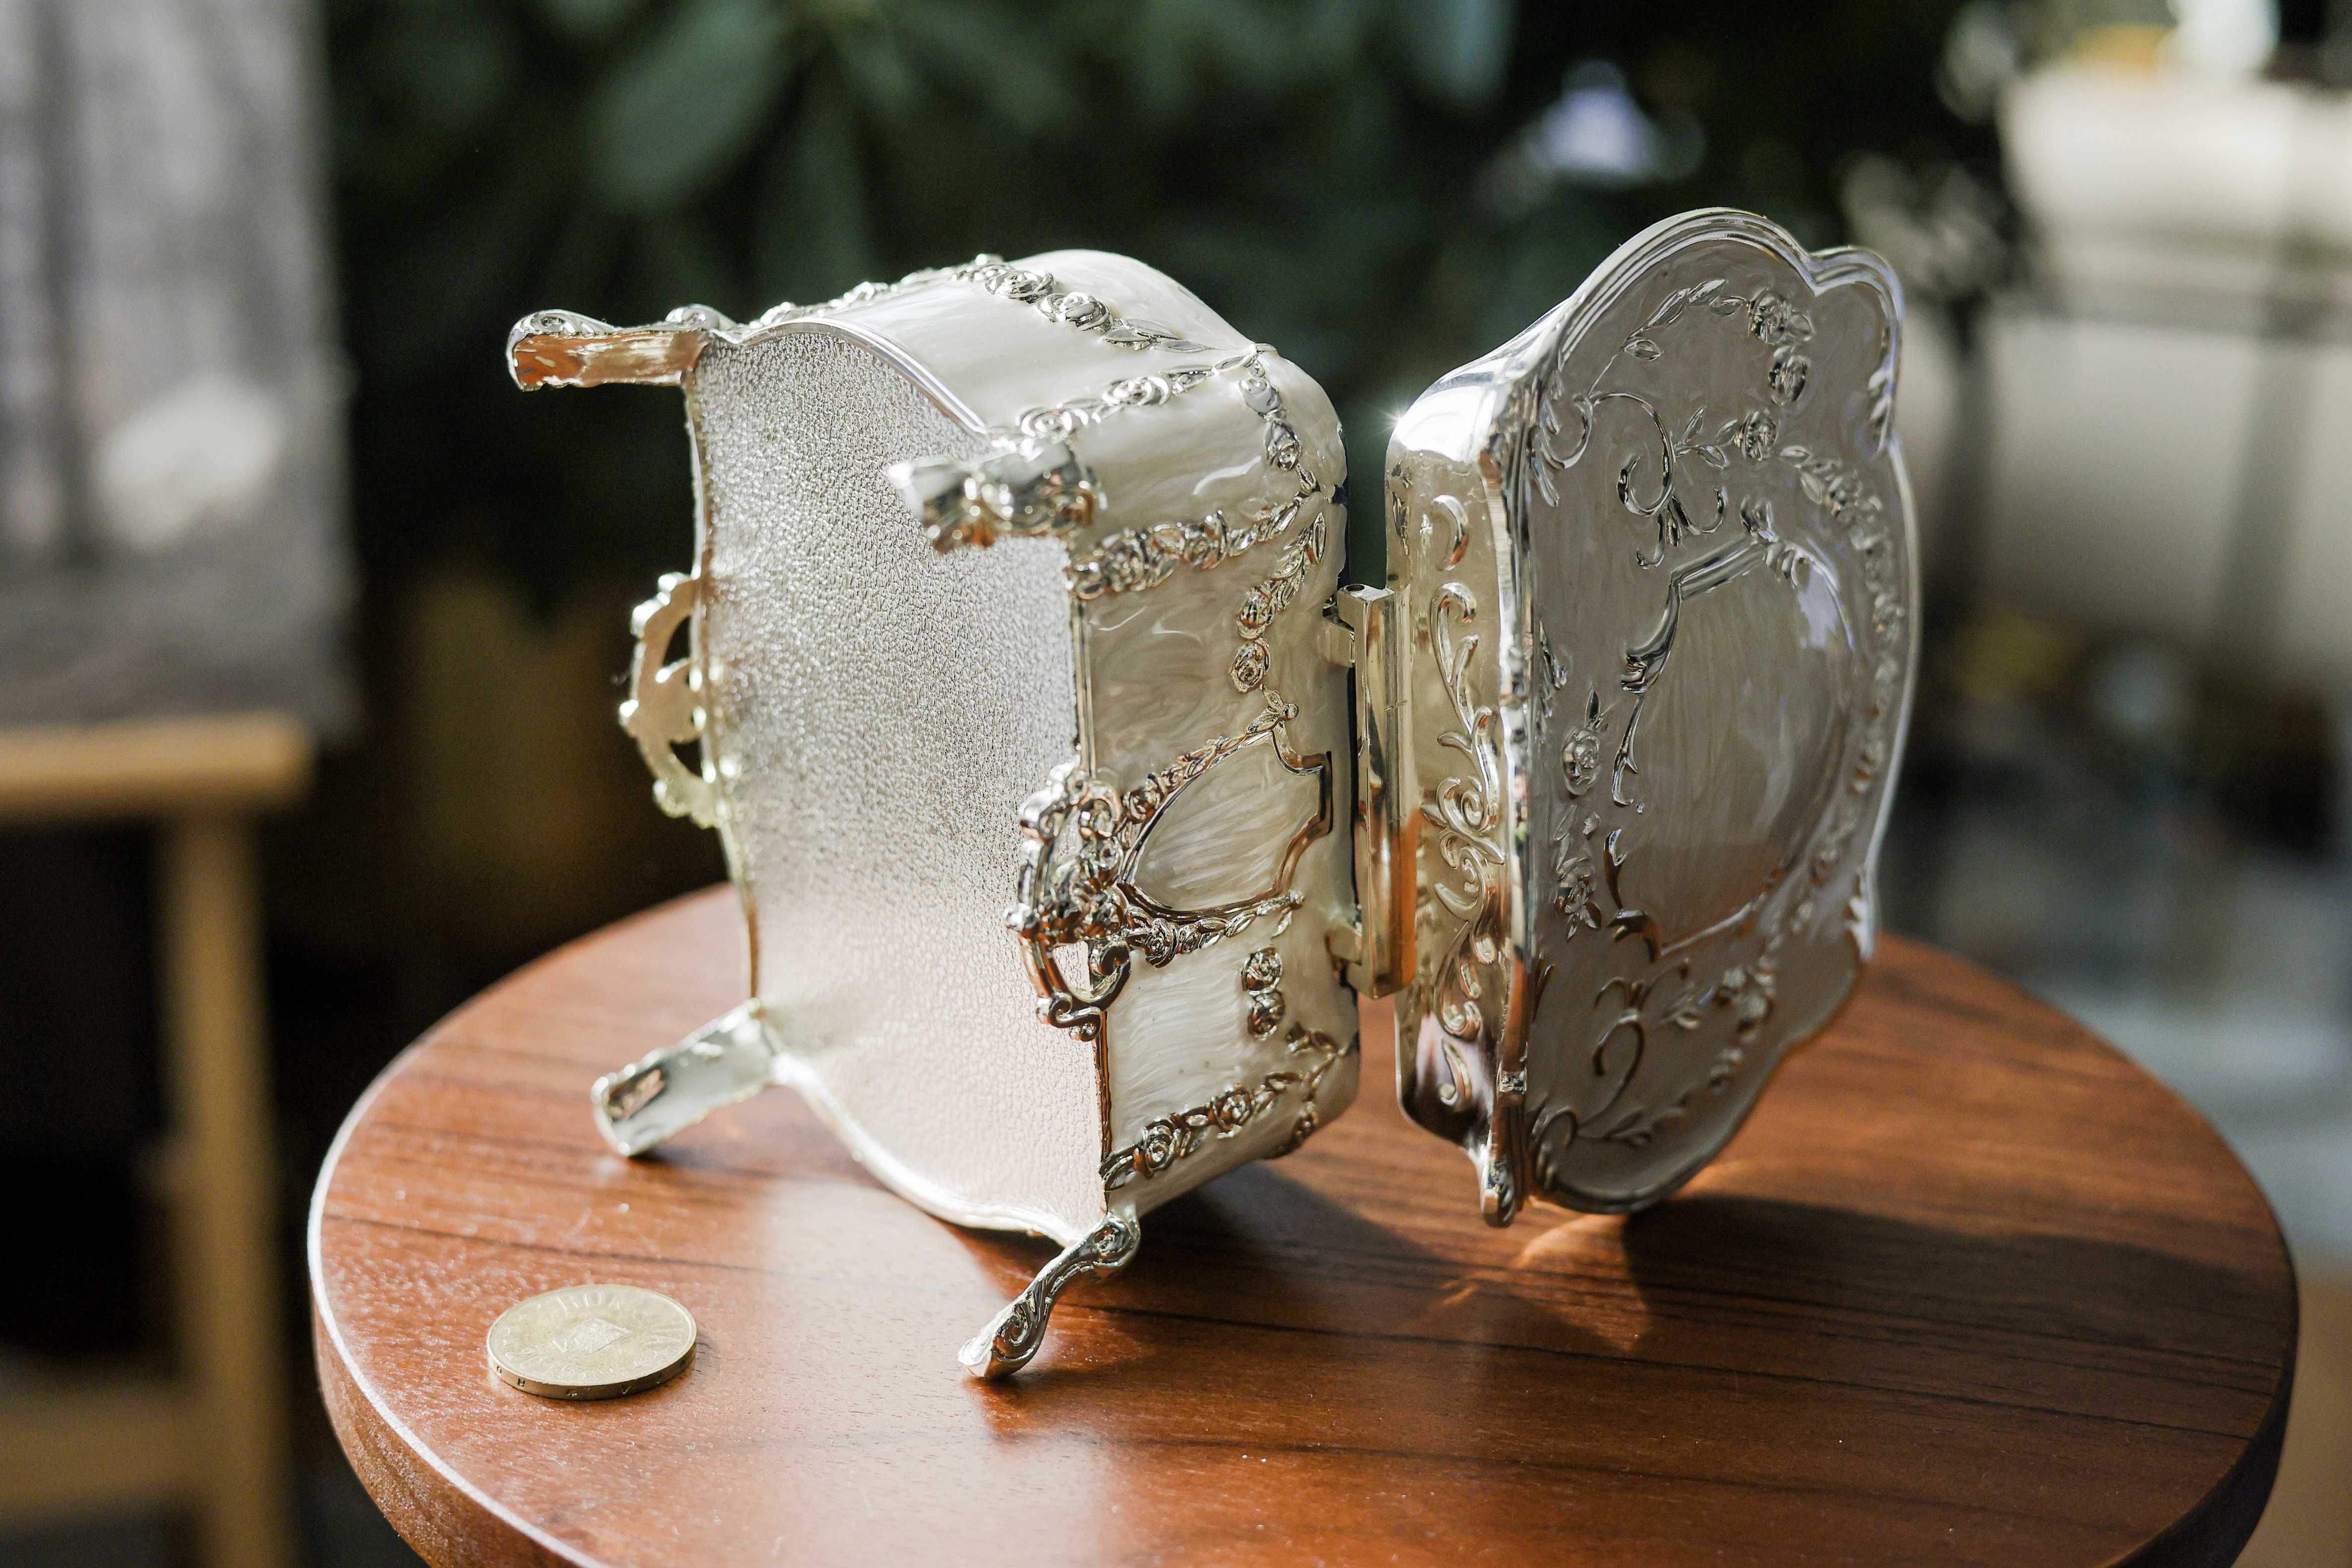 cutiuta cutie caseta bijuterii retro chic argintie emailata perlata